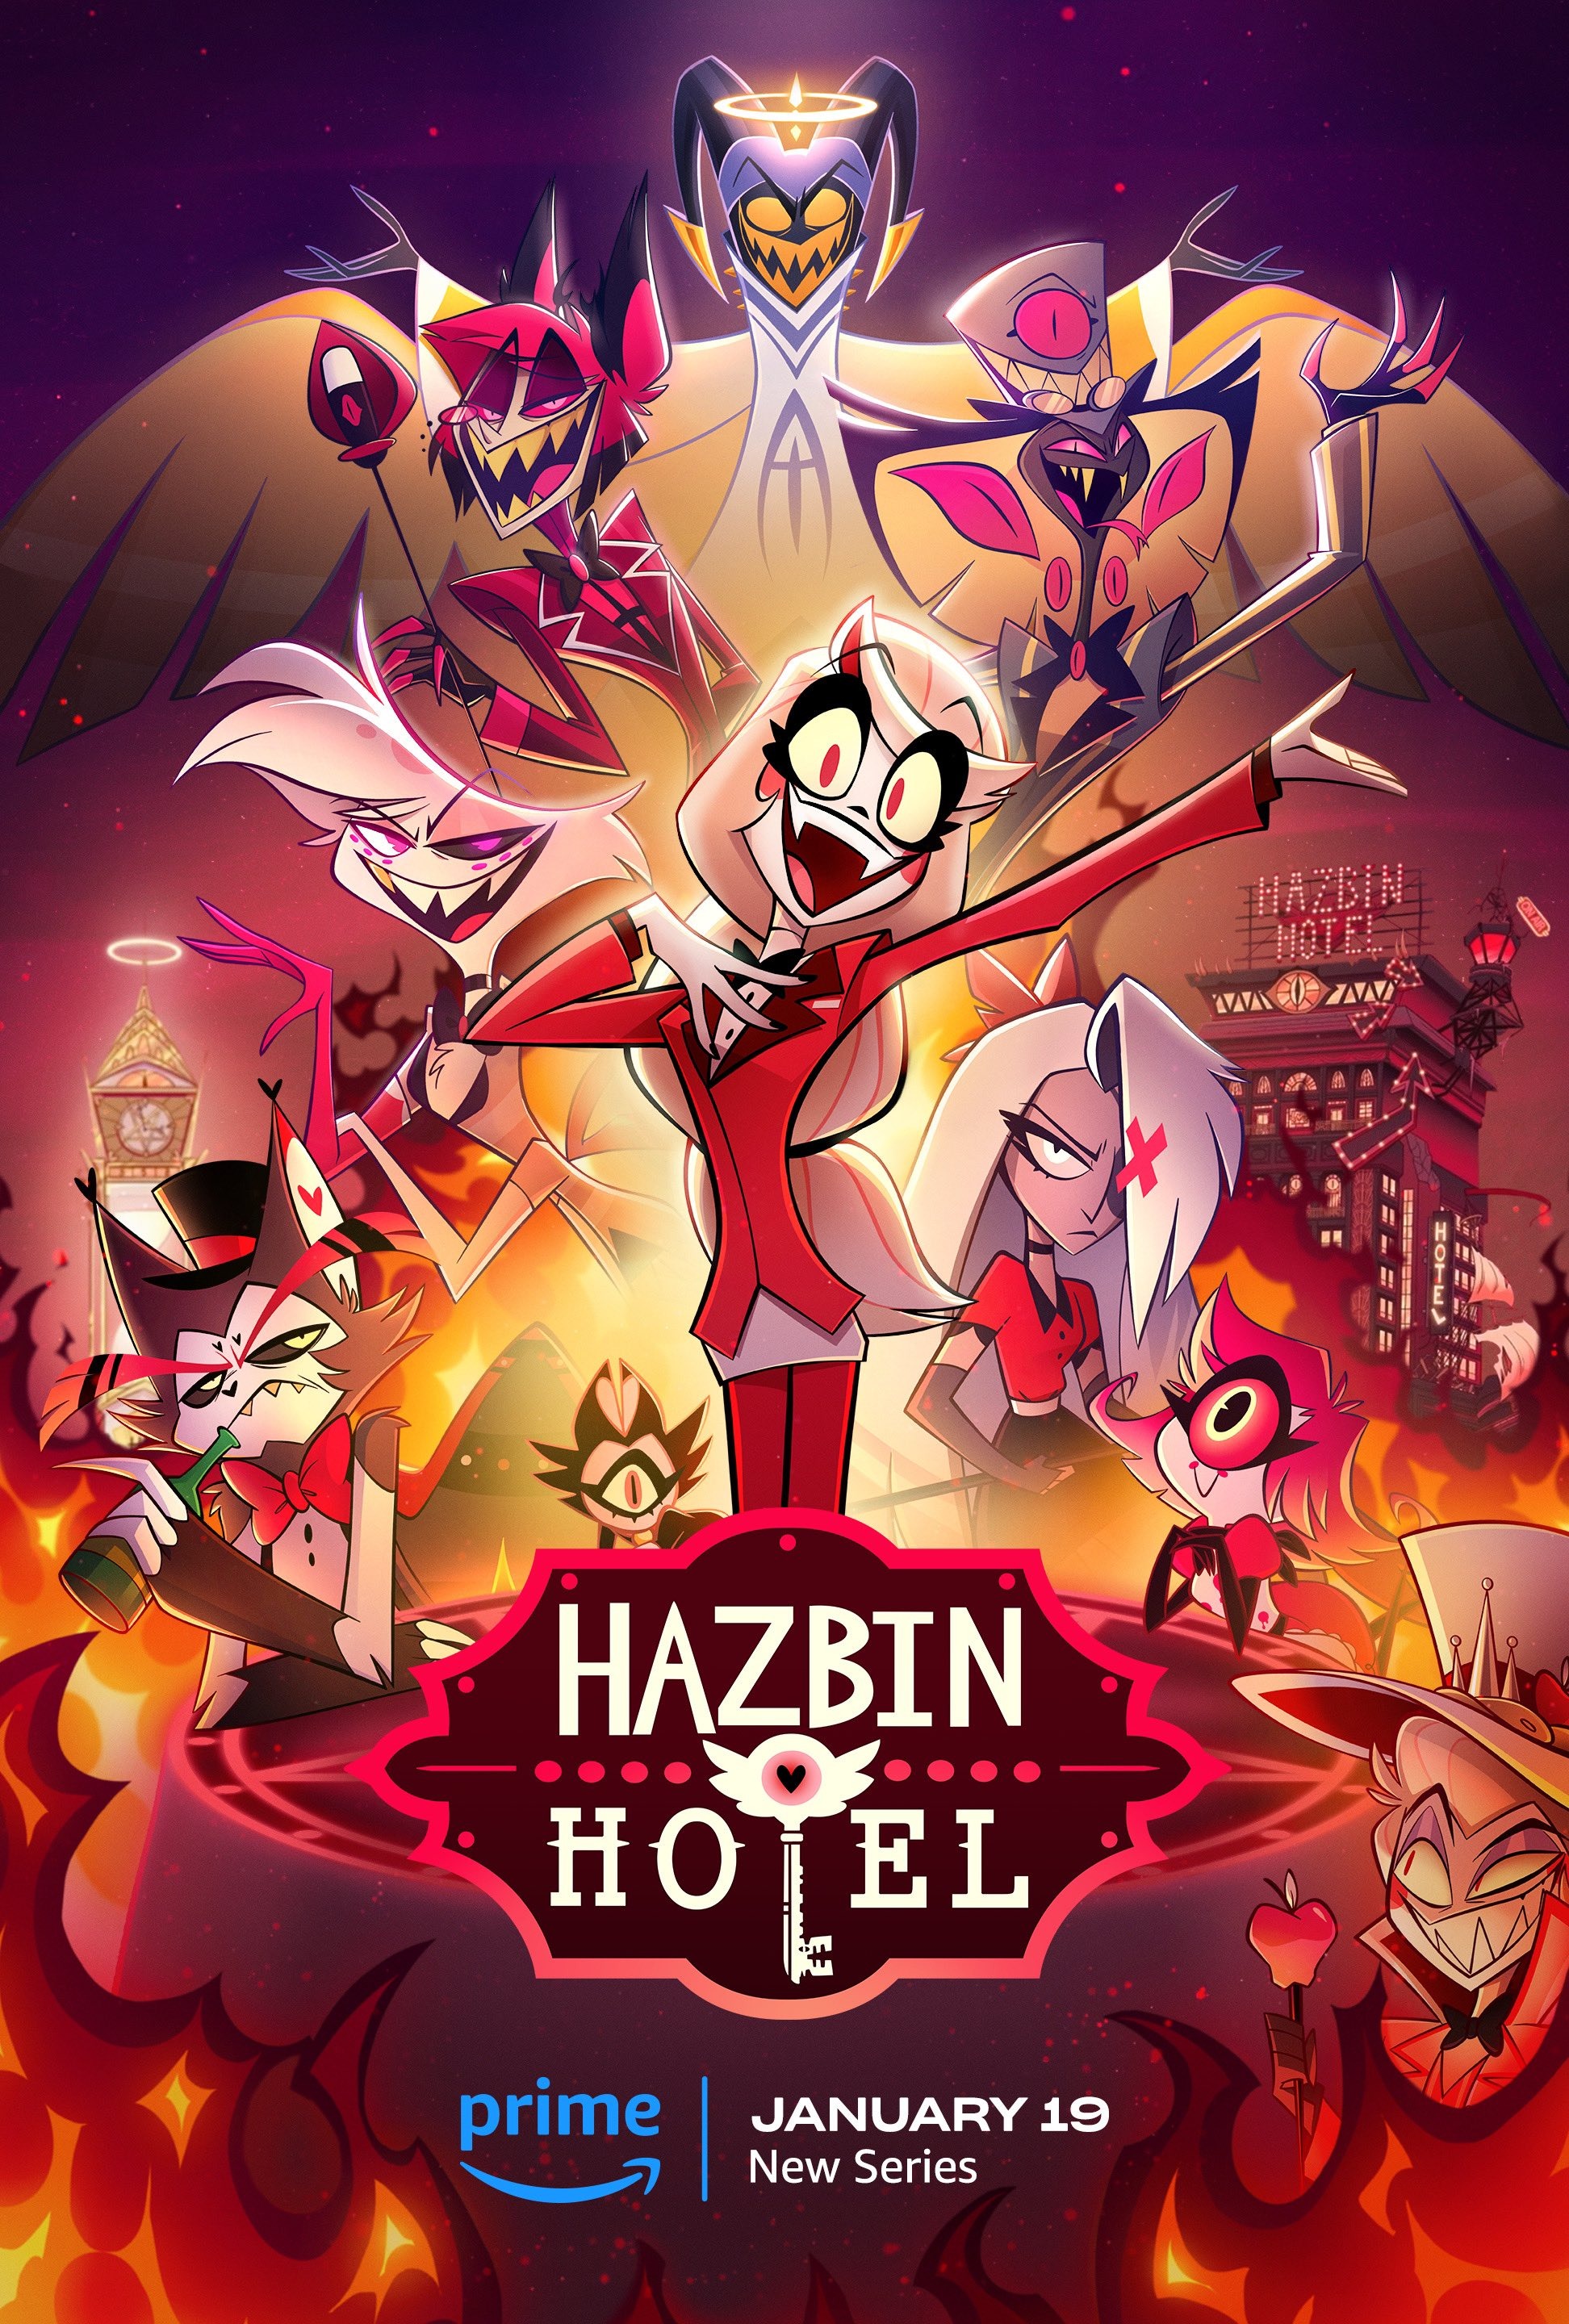 Mega Sized TV Poster Image for Hazbin Hotel (#2 of 2)